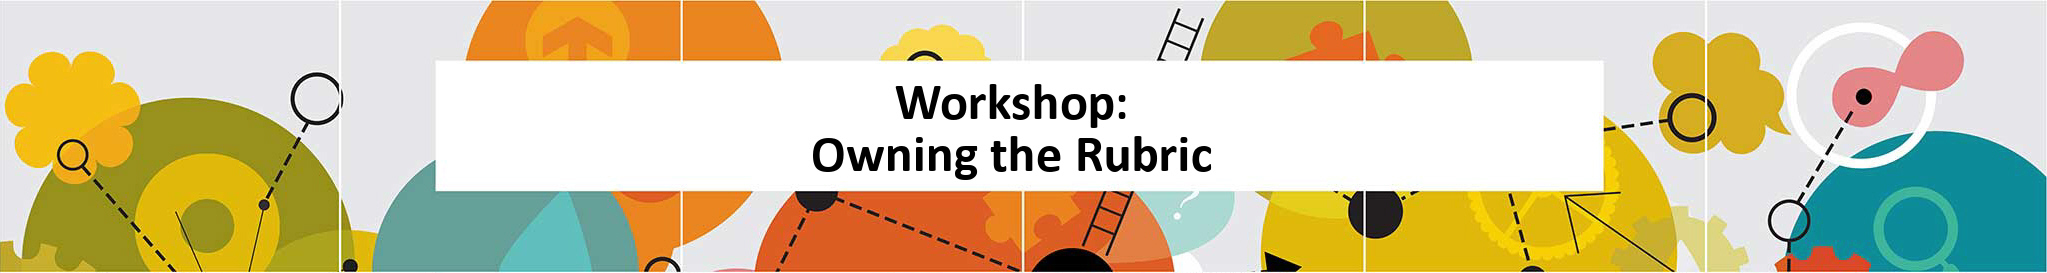 Workshop on Co-construction of Rubrics